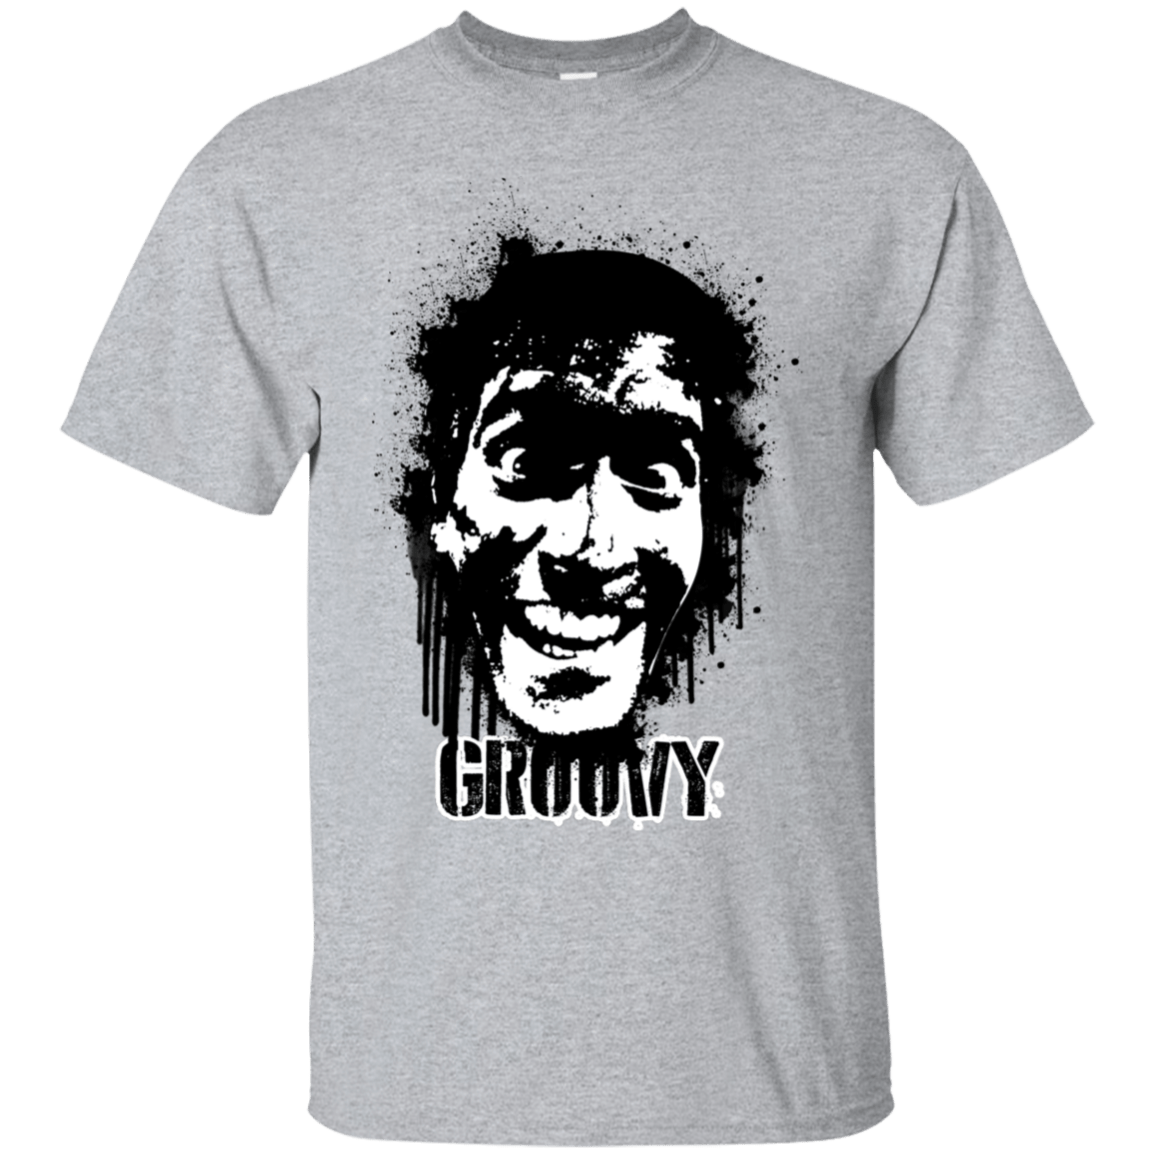 T-Shirts Sport Grey / S Groovy T-Shirt